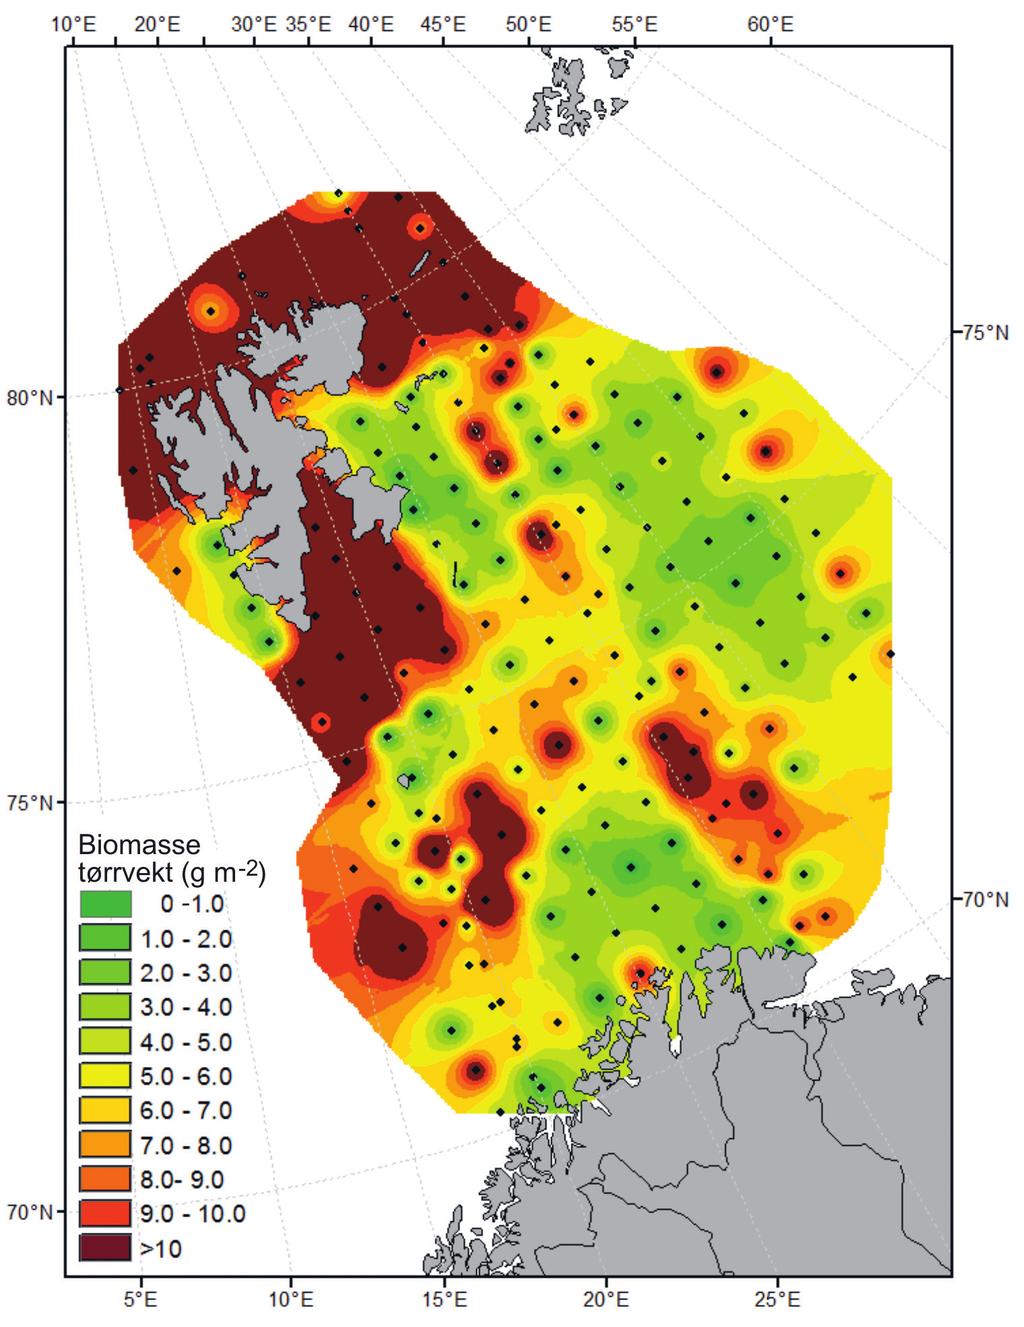 Barentshavet I 2012 ble det målt en klar økning i mengde dyreplankton i Barentshavet i forhold til foregående år. Økningen var særlig merkbar i den nordlige delen av Barentshavet.